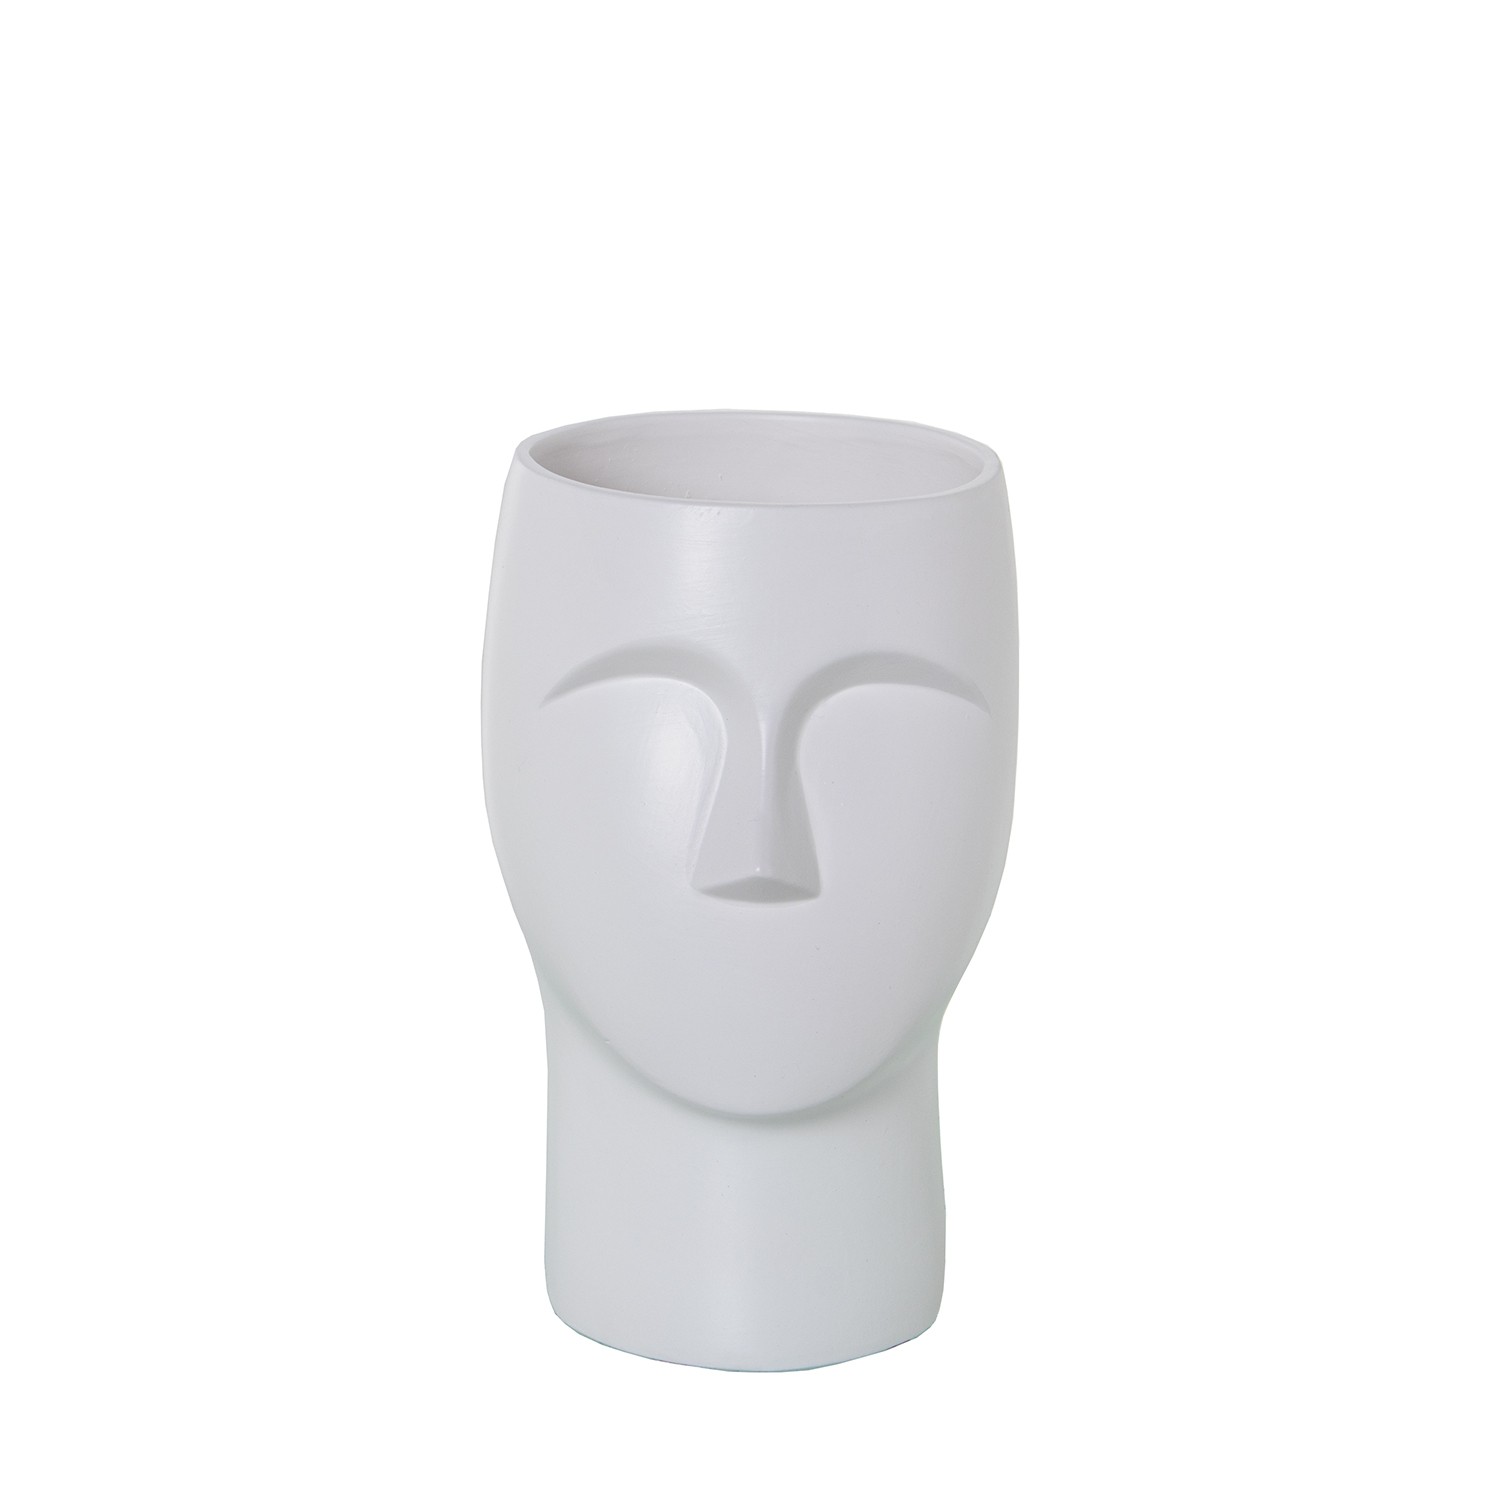 35584-jarron-ceramica-rostro-blanco.jfif